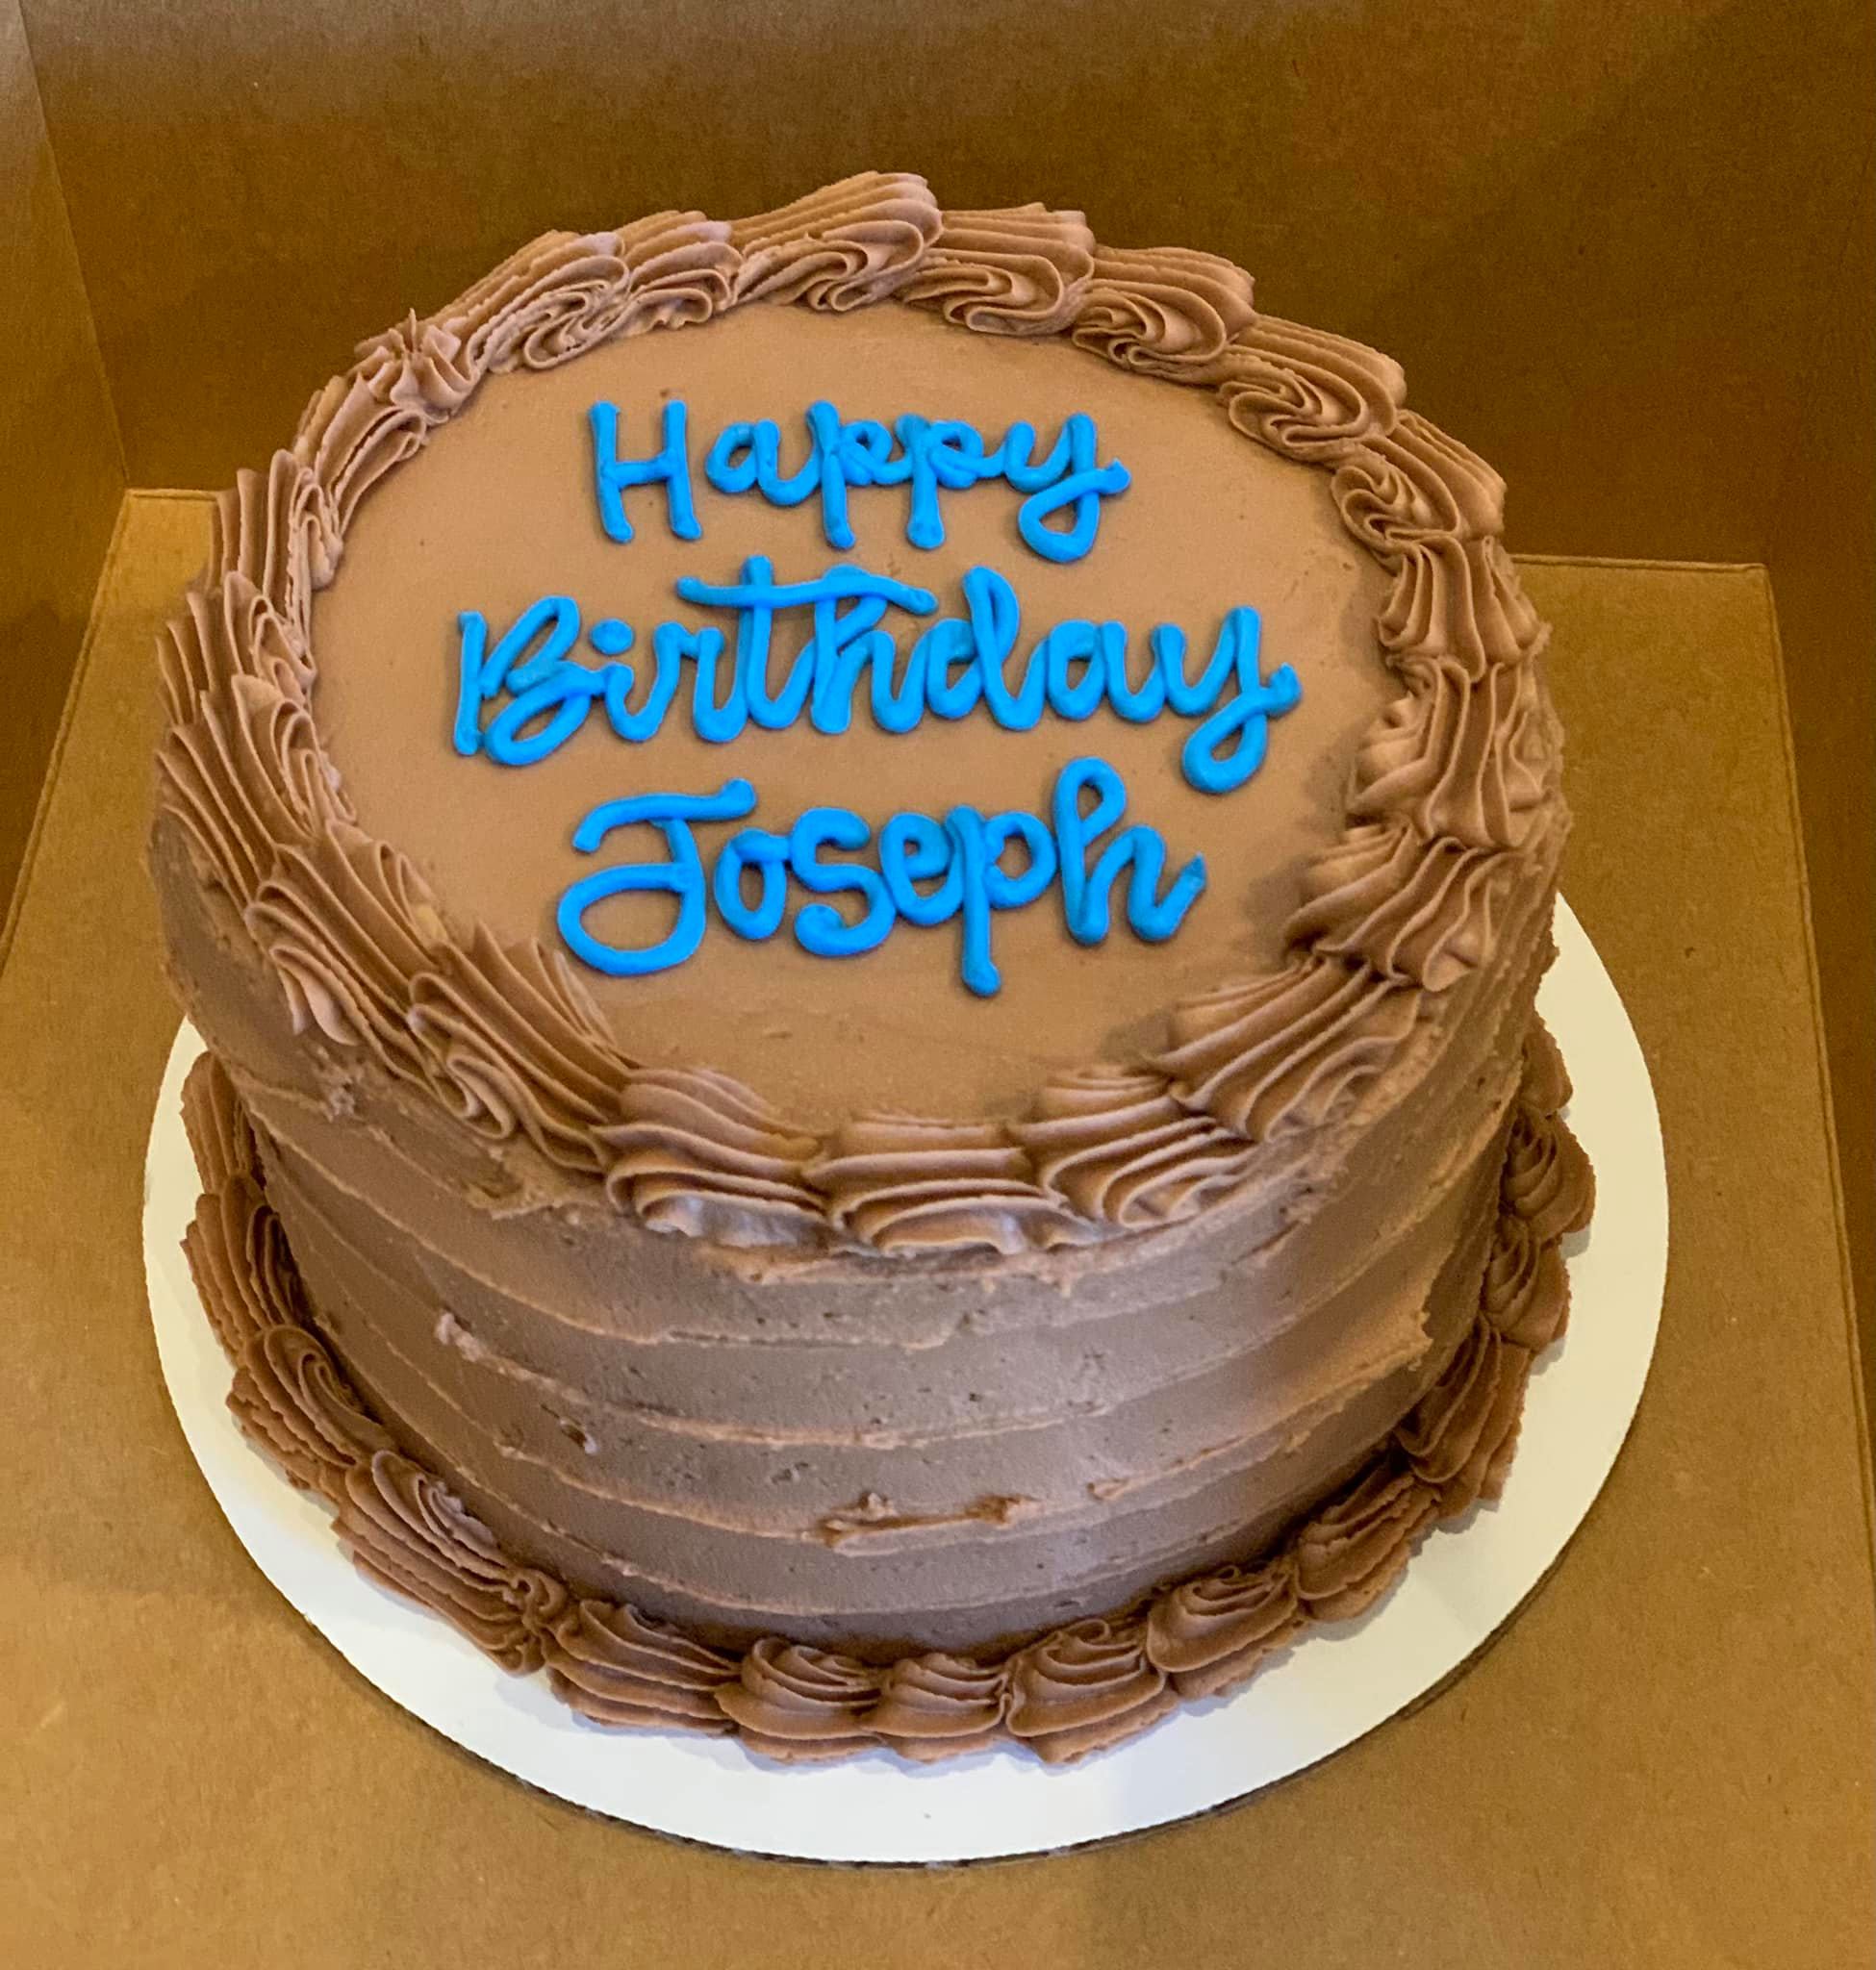 Joseph's Birthday Cake. - CakeCentral.com